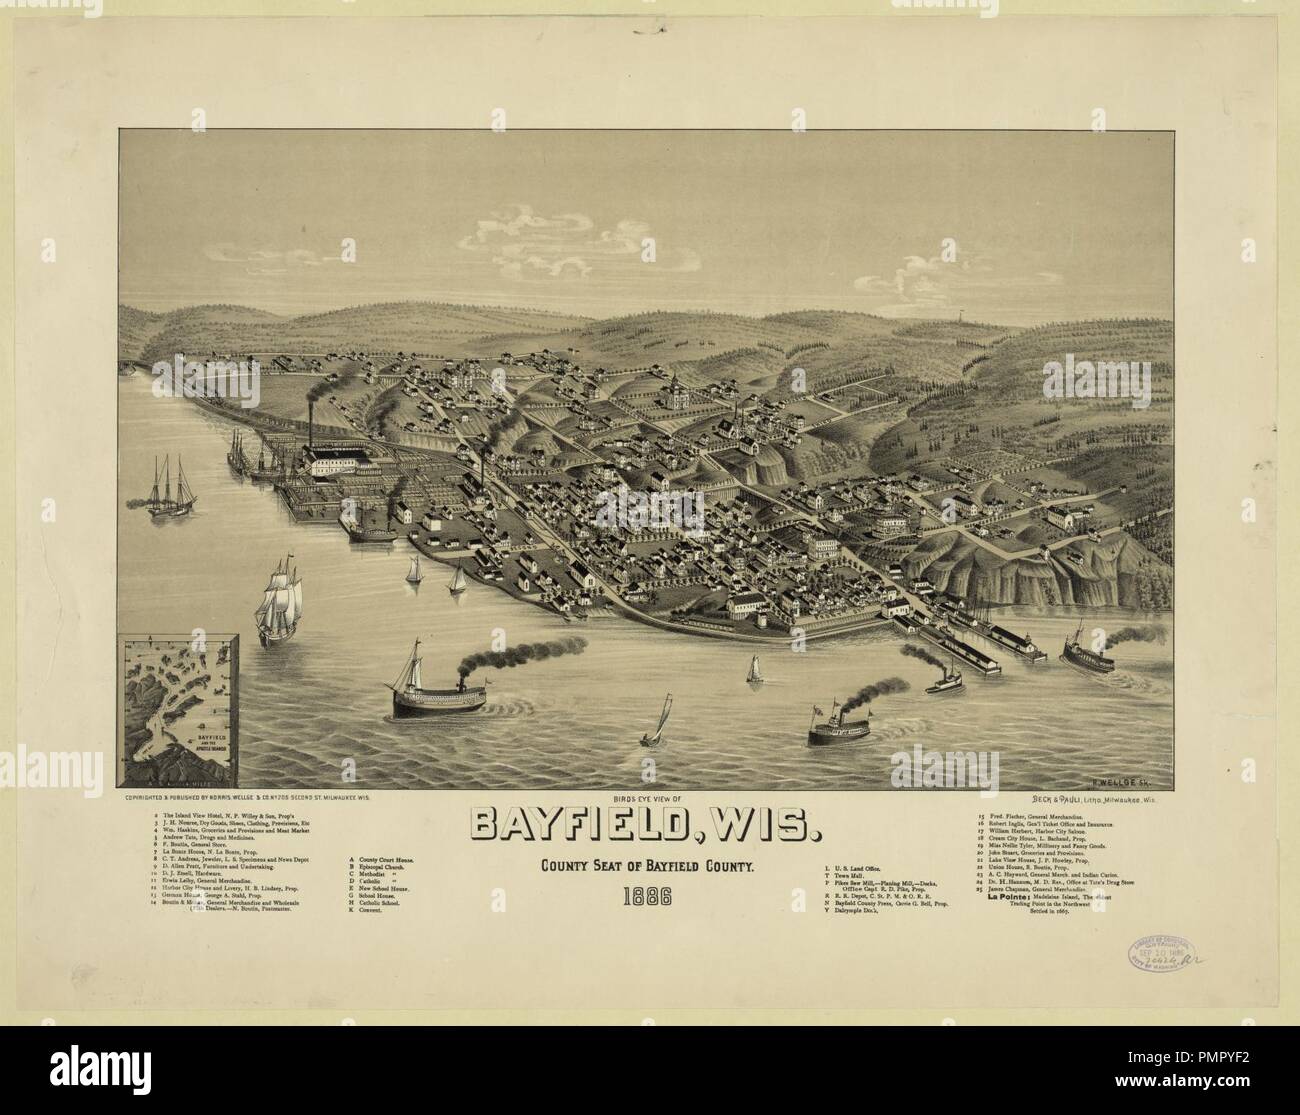 Panoramica di Bayfield, Wis., sede della contea di Bayfield County-1886 - H. Wellge sk. ; Beck & Pauli, litio., Milwaukee, Wisconsin Foto Stock